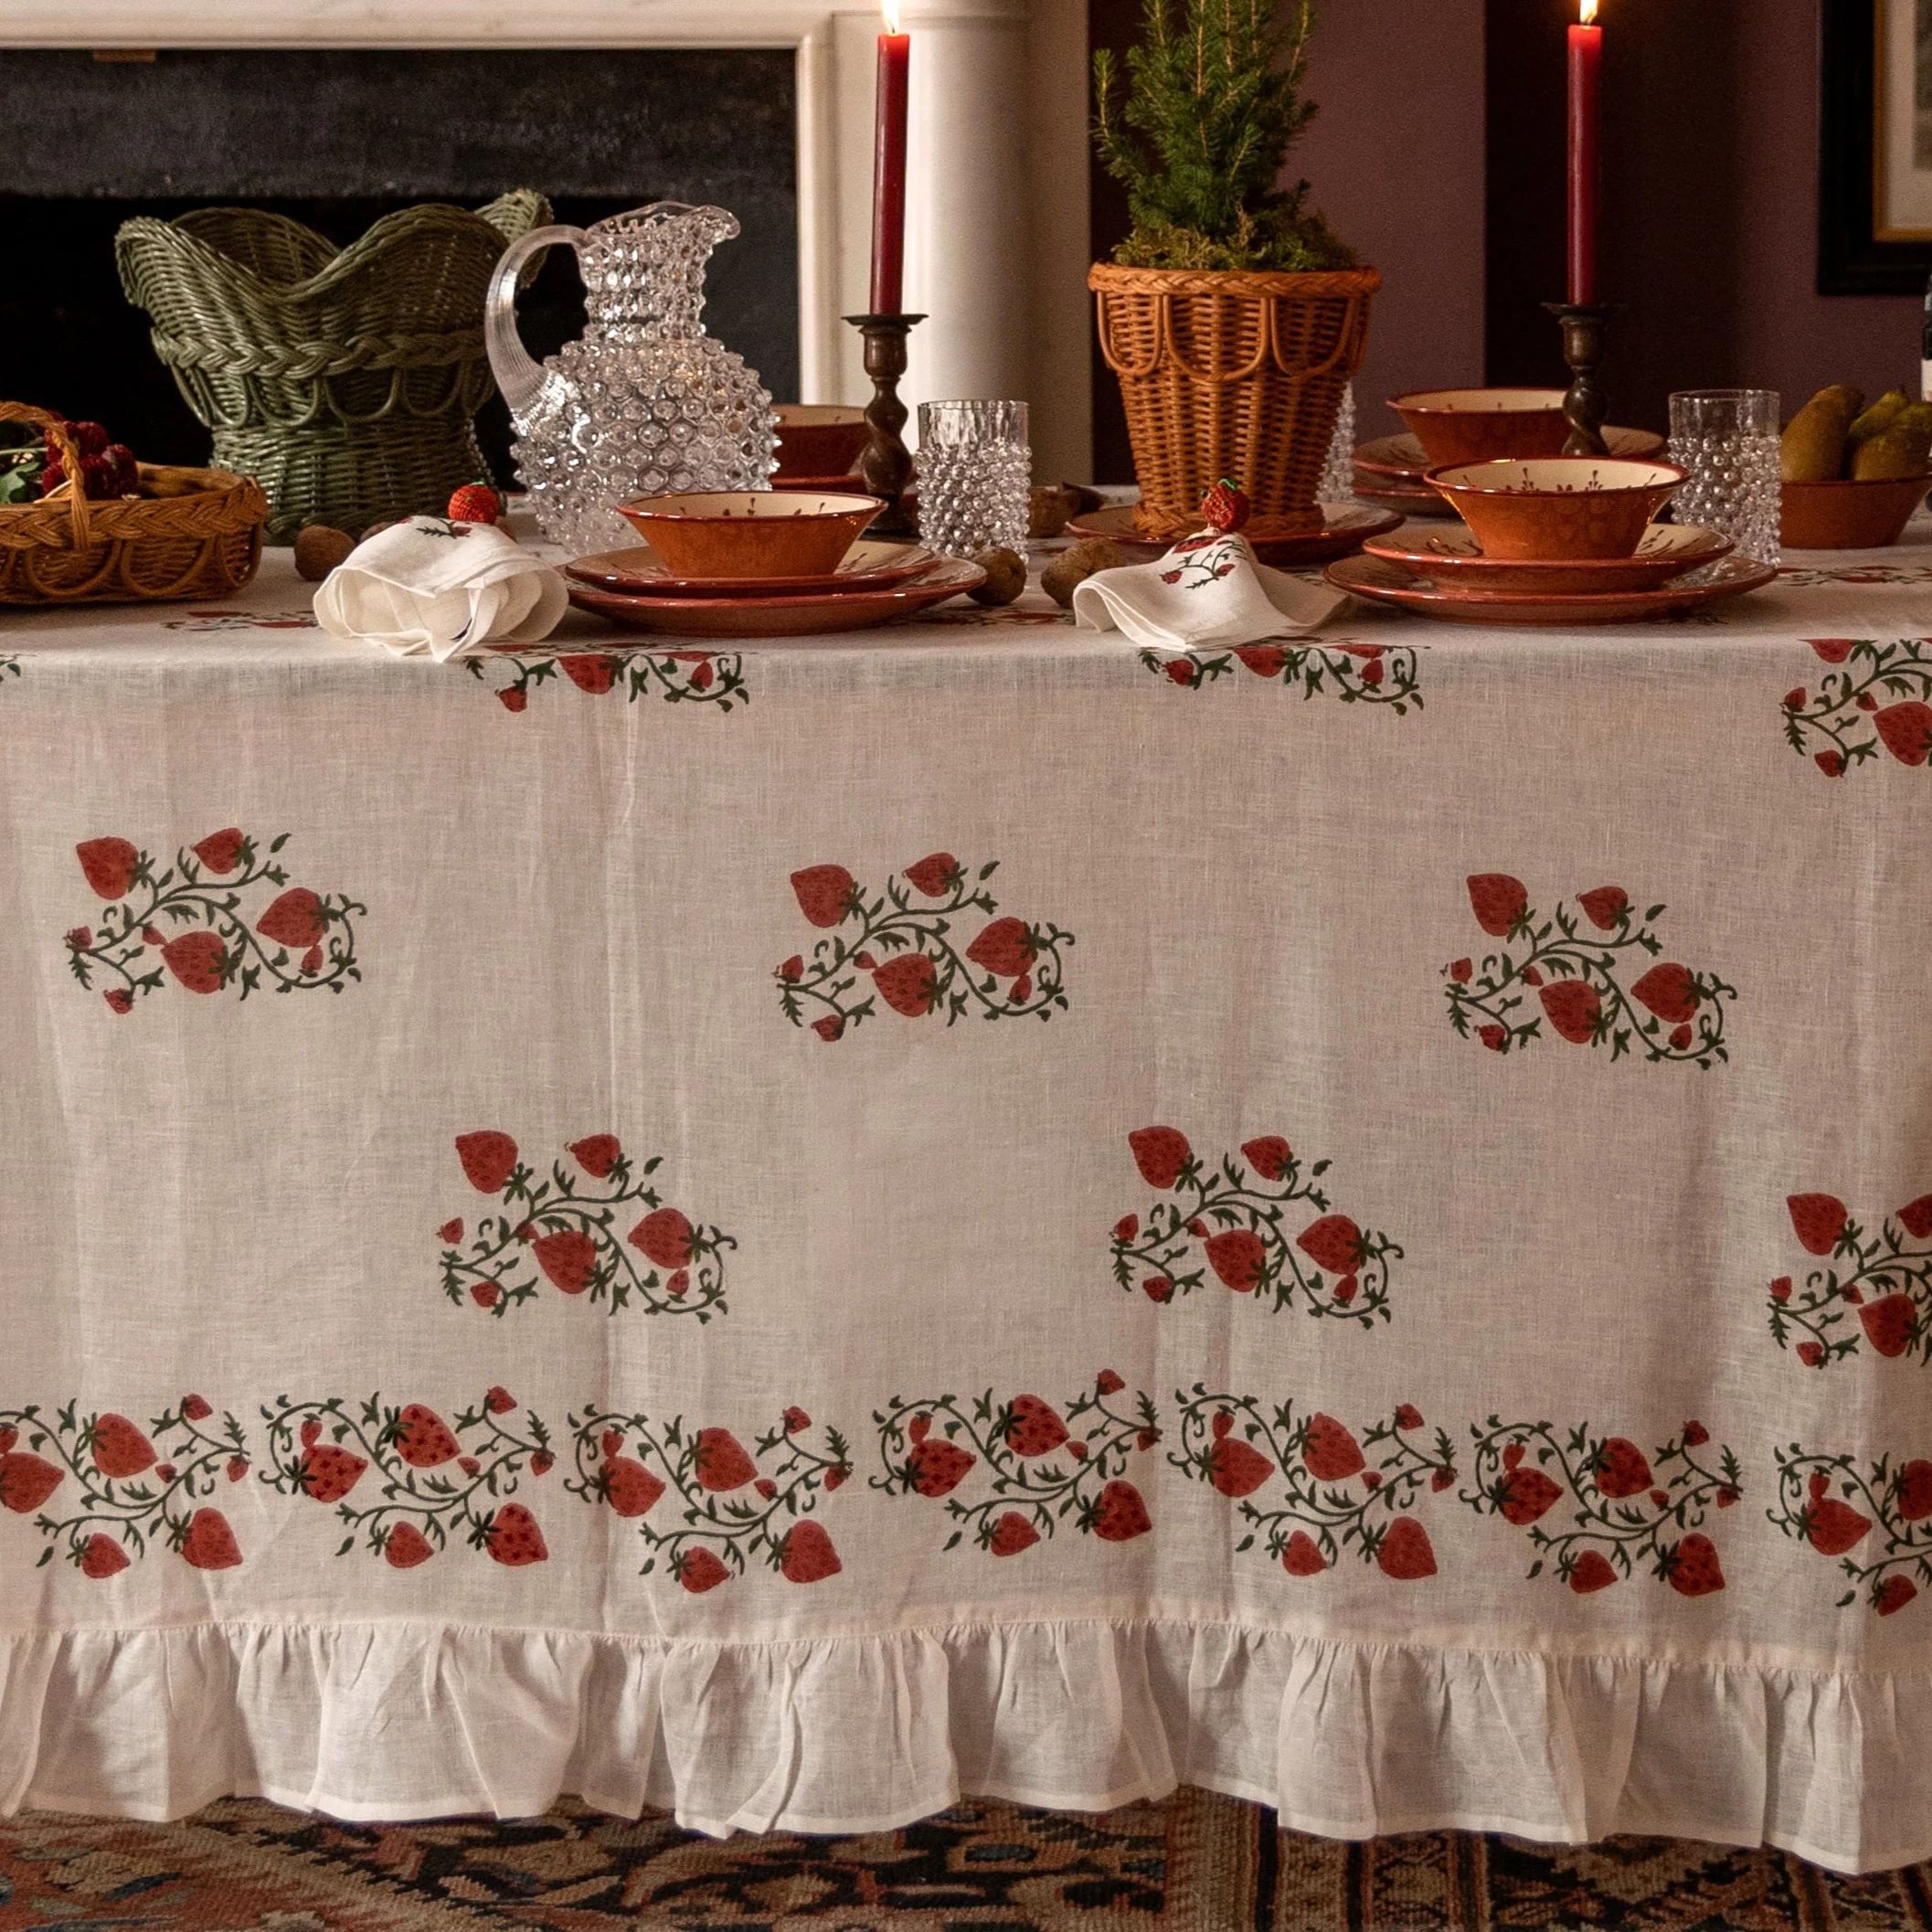 Fraises des bois Tablecloth | Sharland England